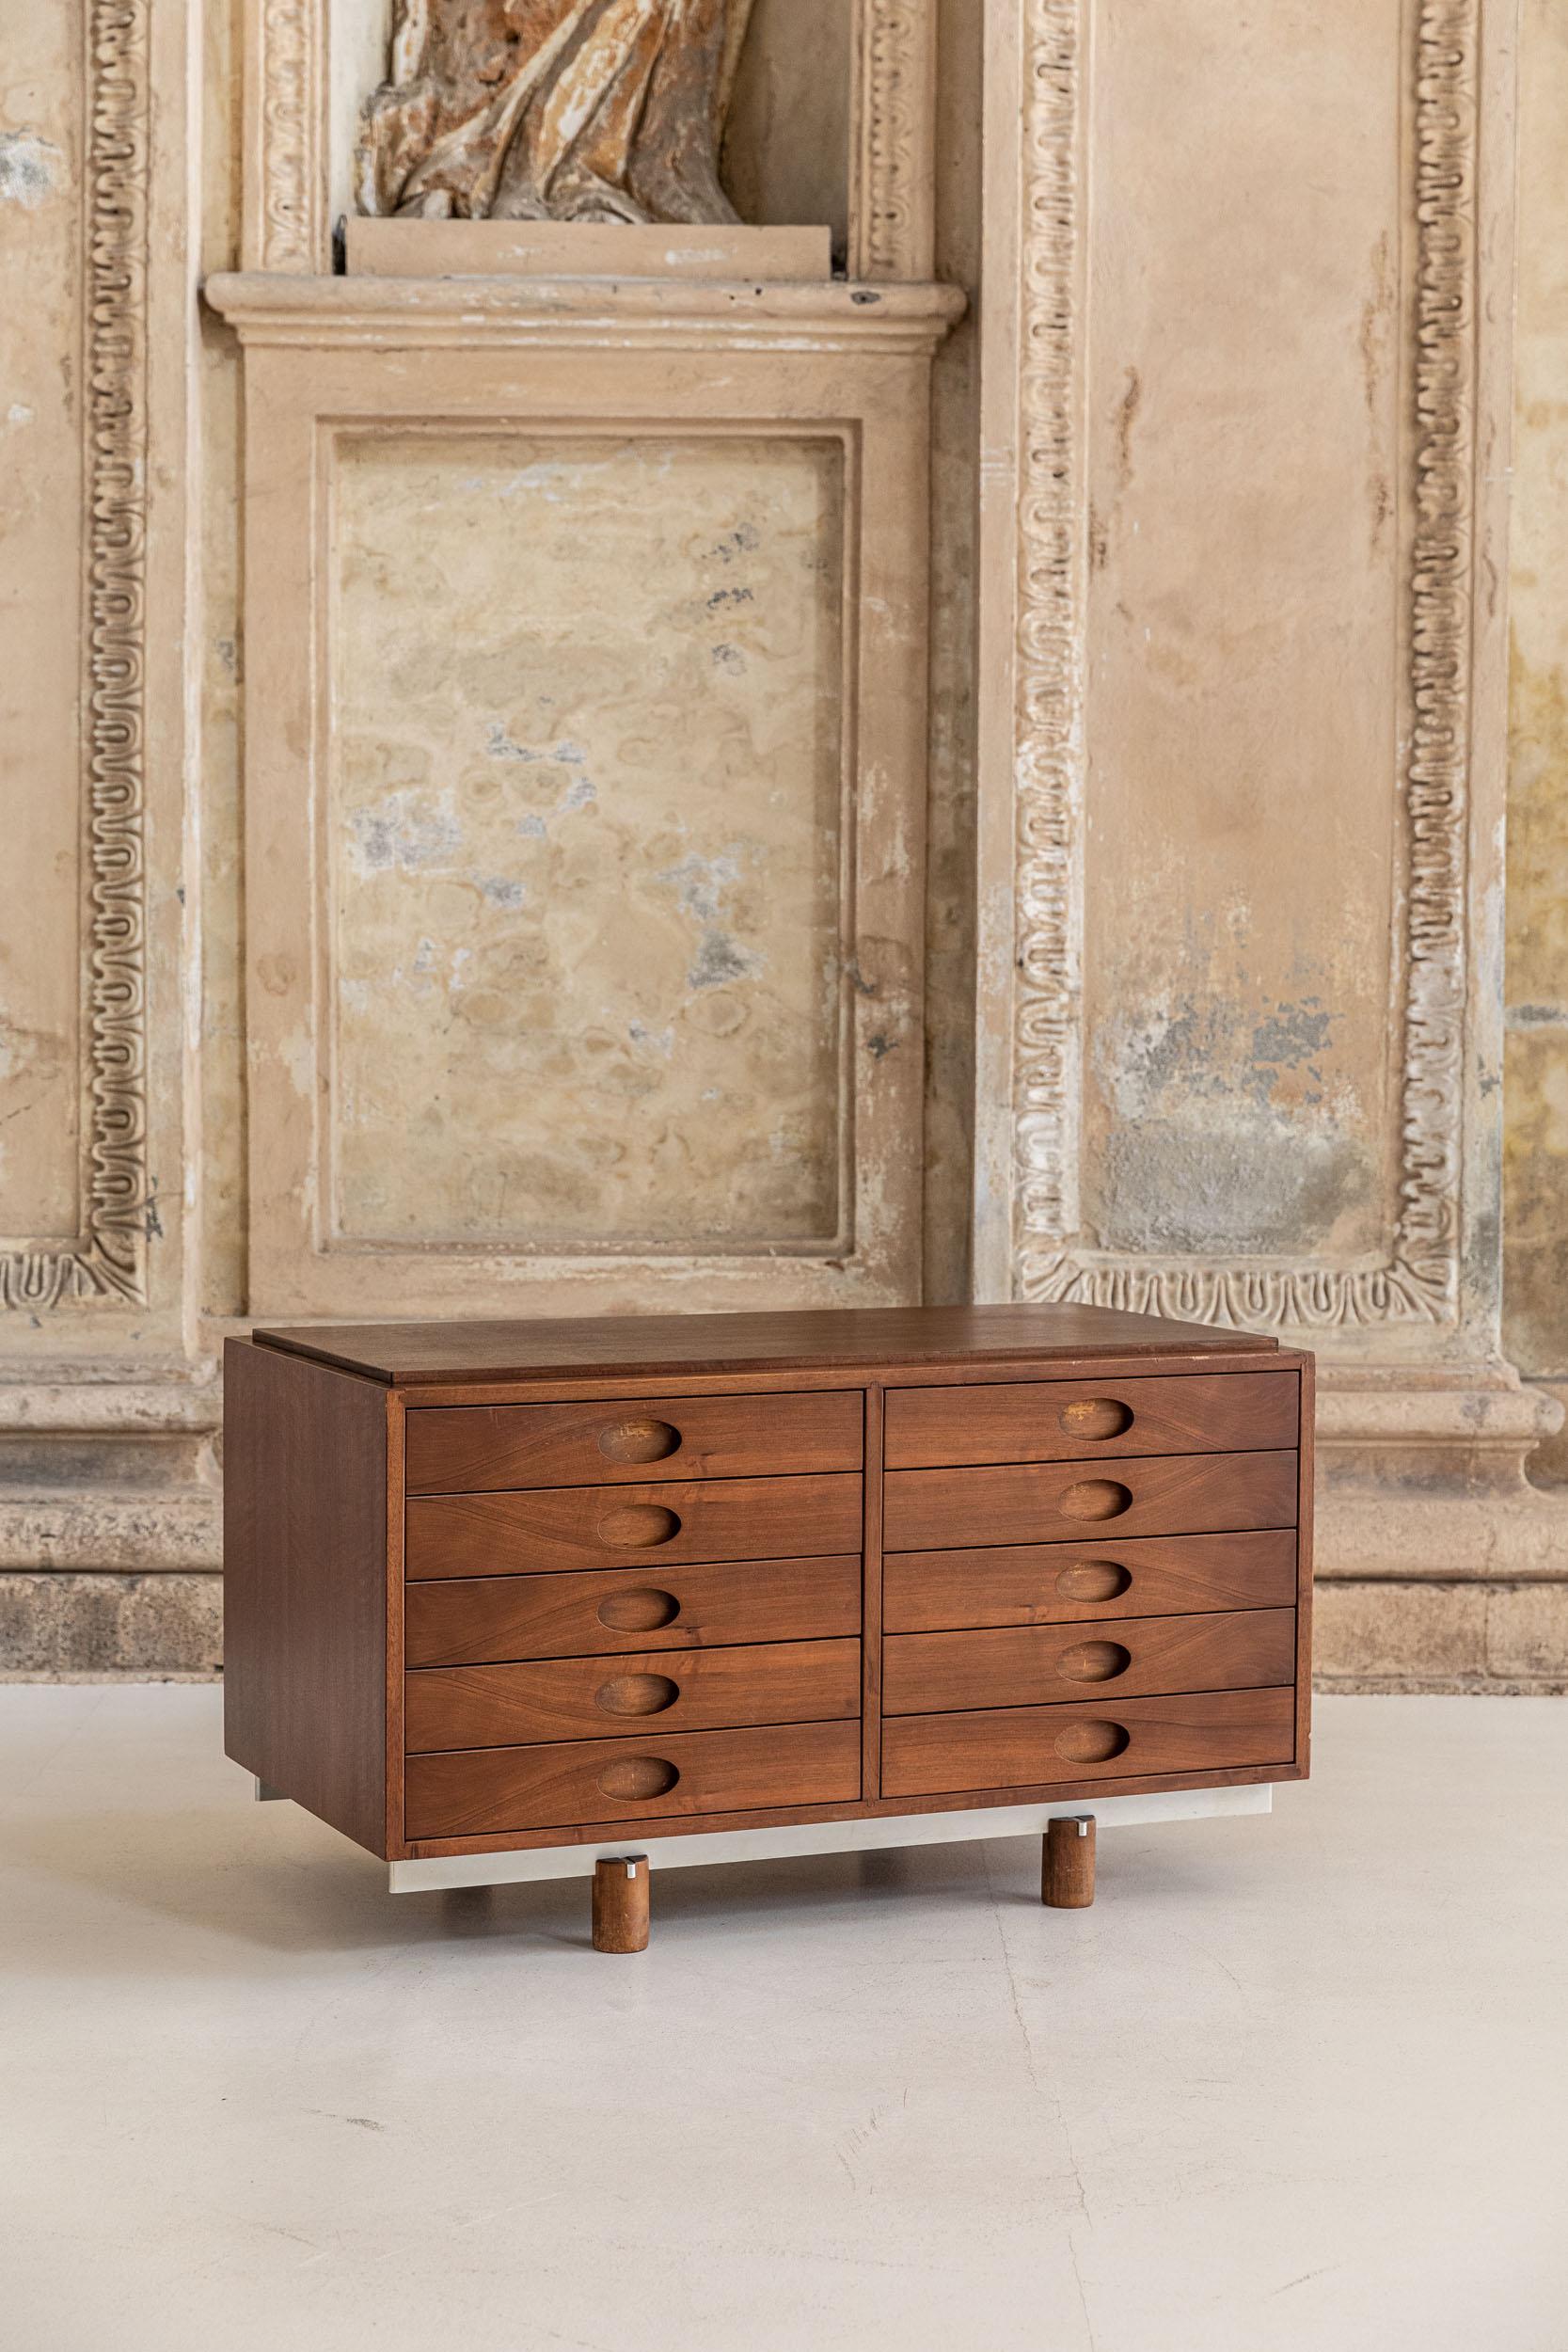 Mid-Century Modern Italian midcentury cest of drawers by Gianfranco Frattini 